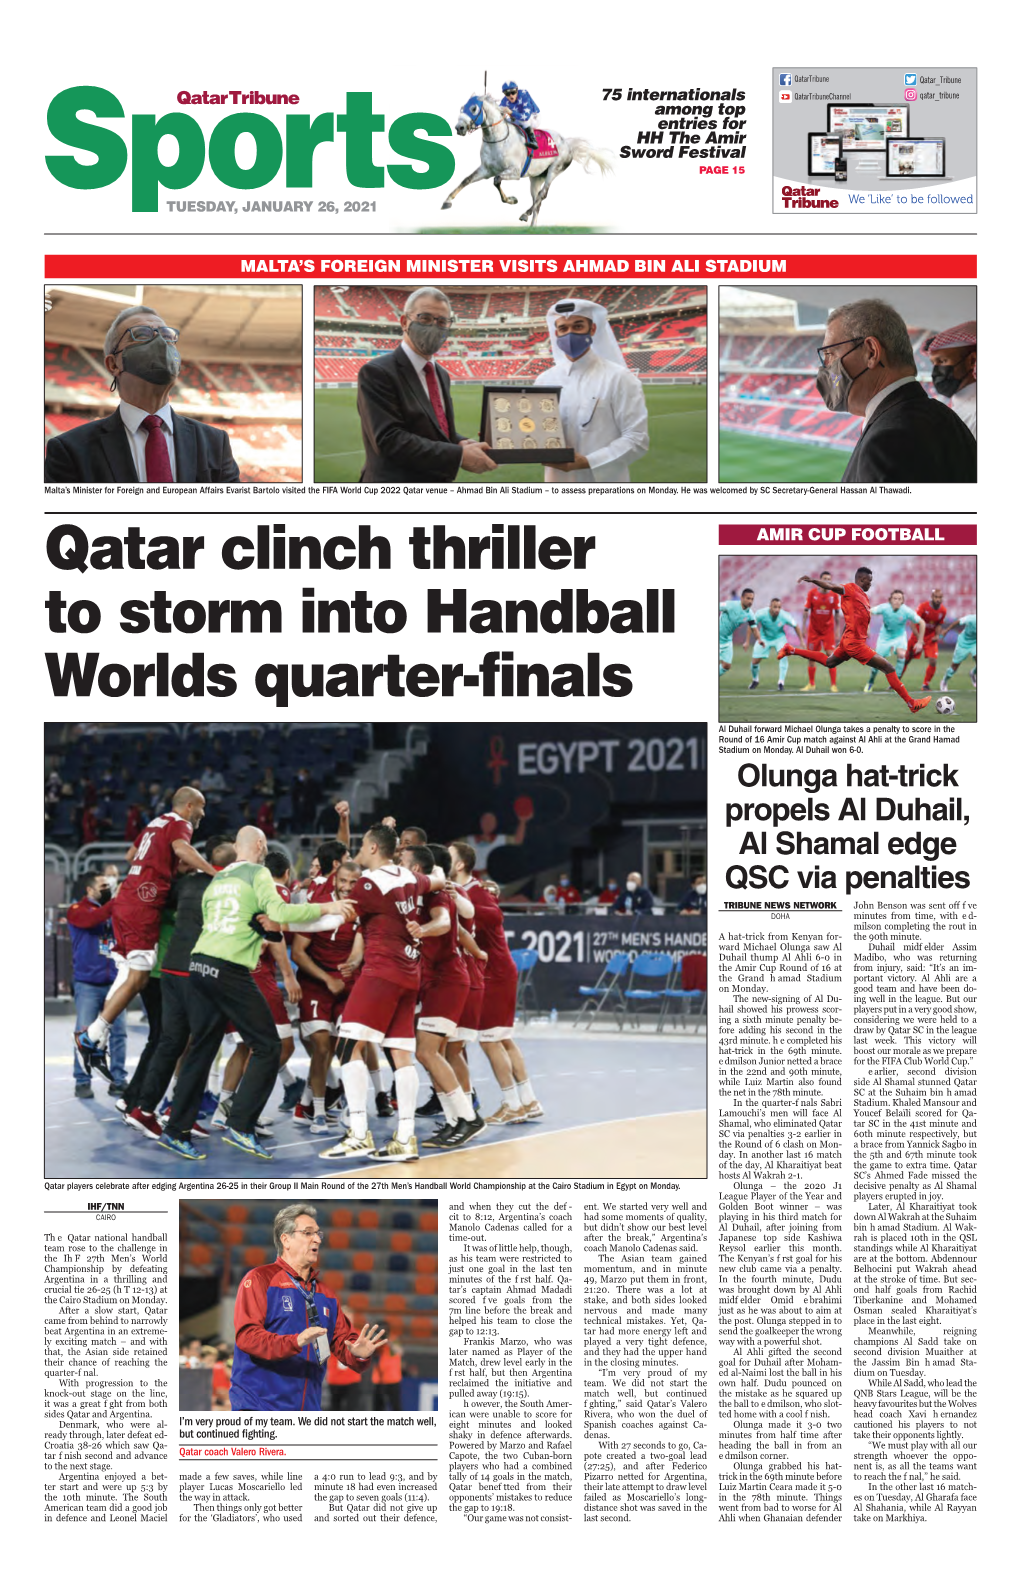 Qatar Clinch Thriller to Storm Into Handball Worlds Quarter-Finals